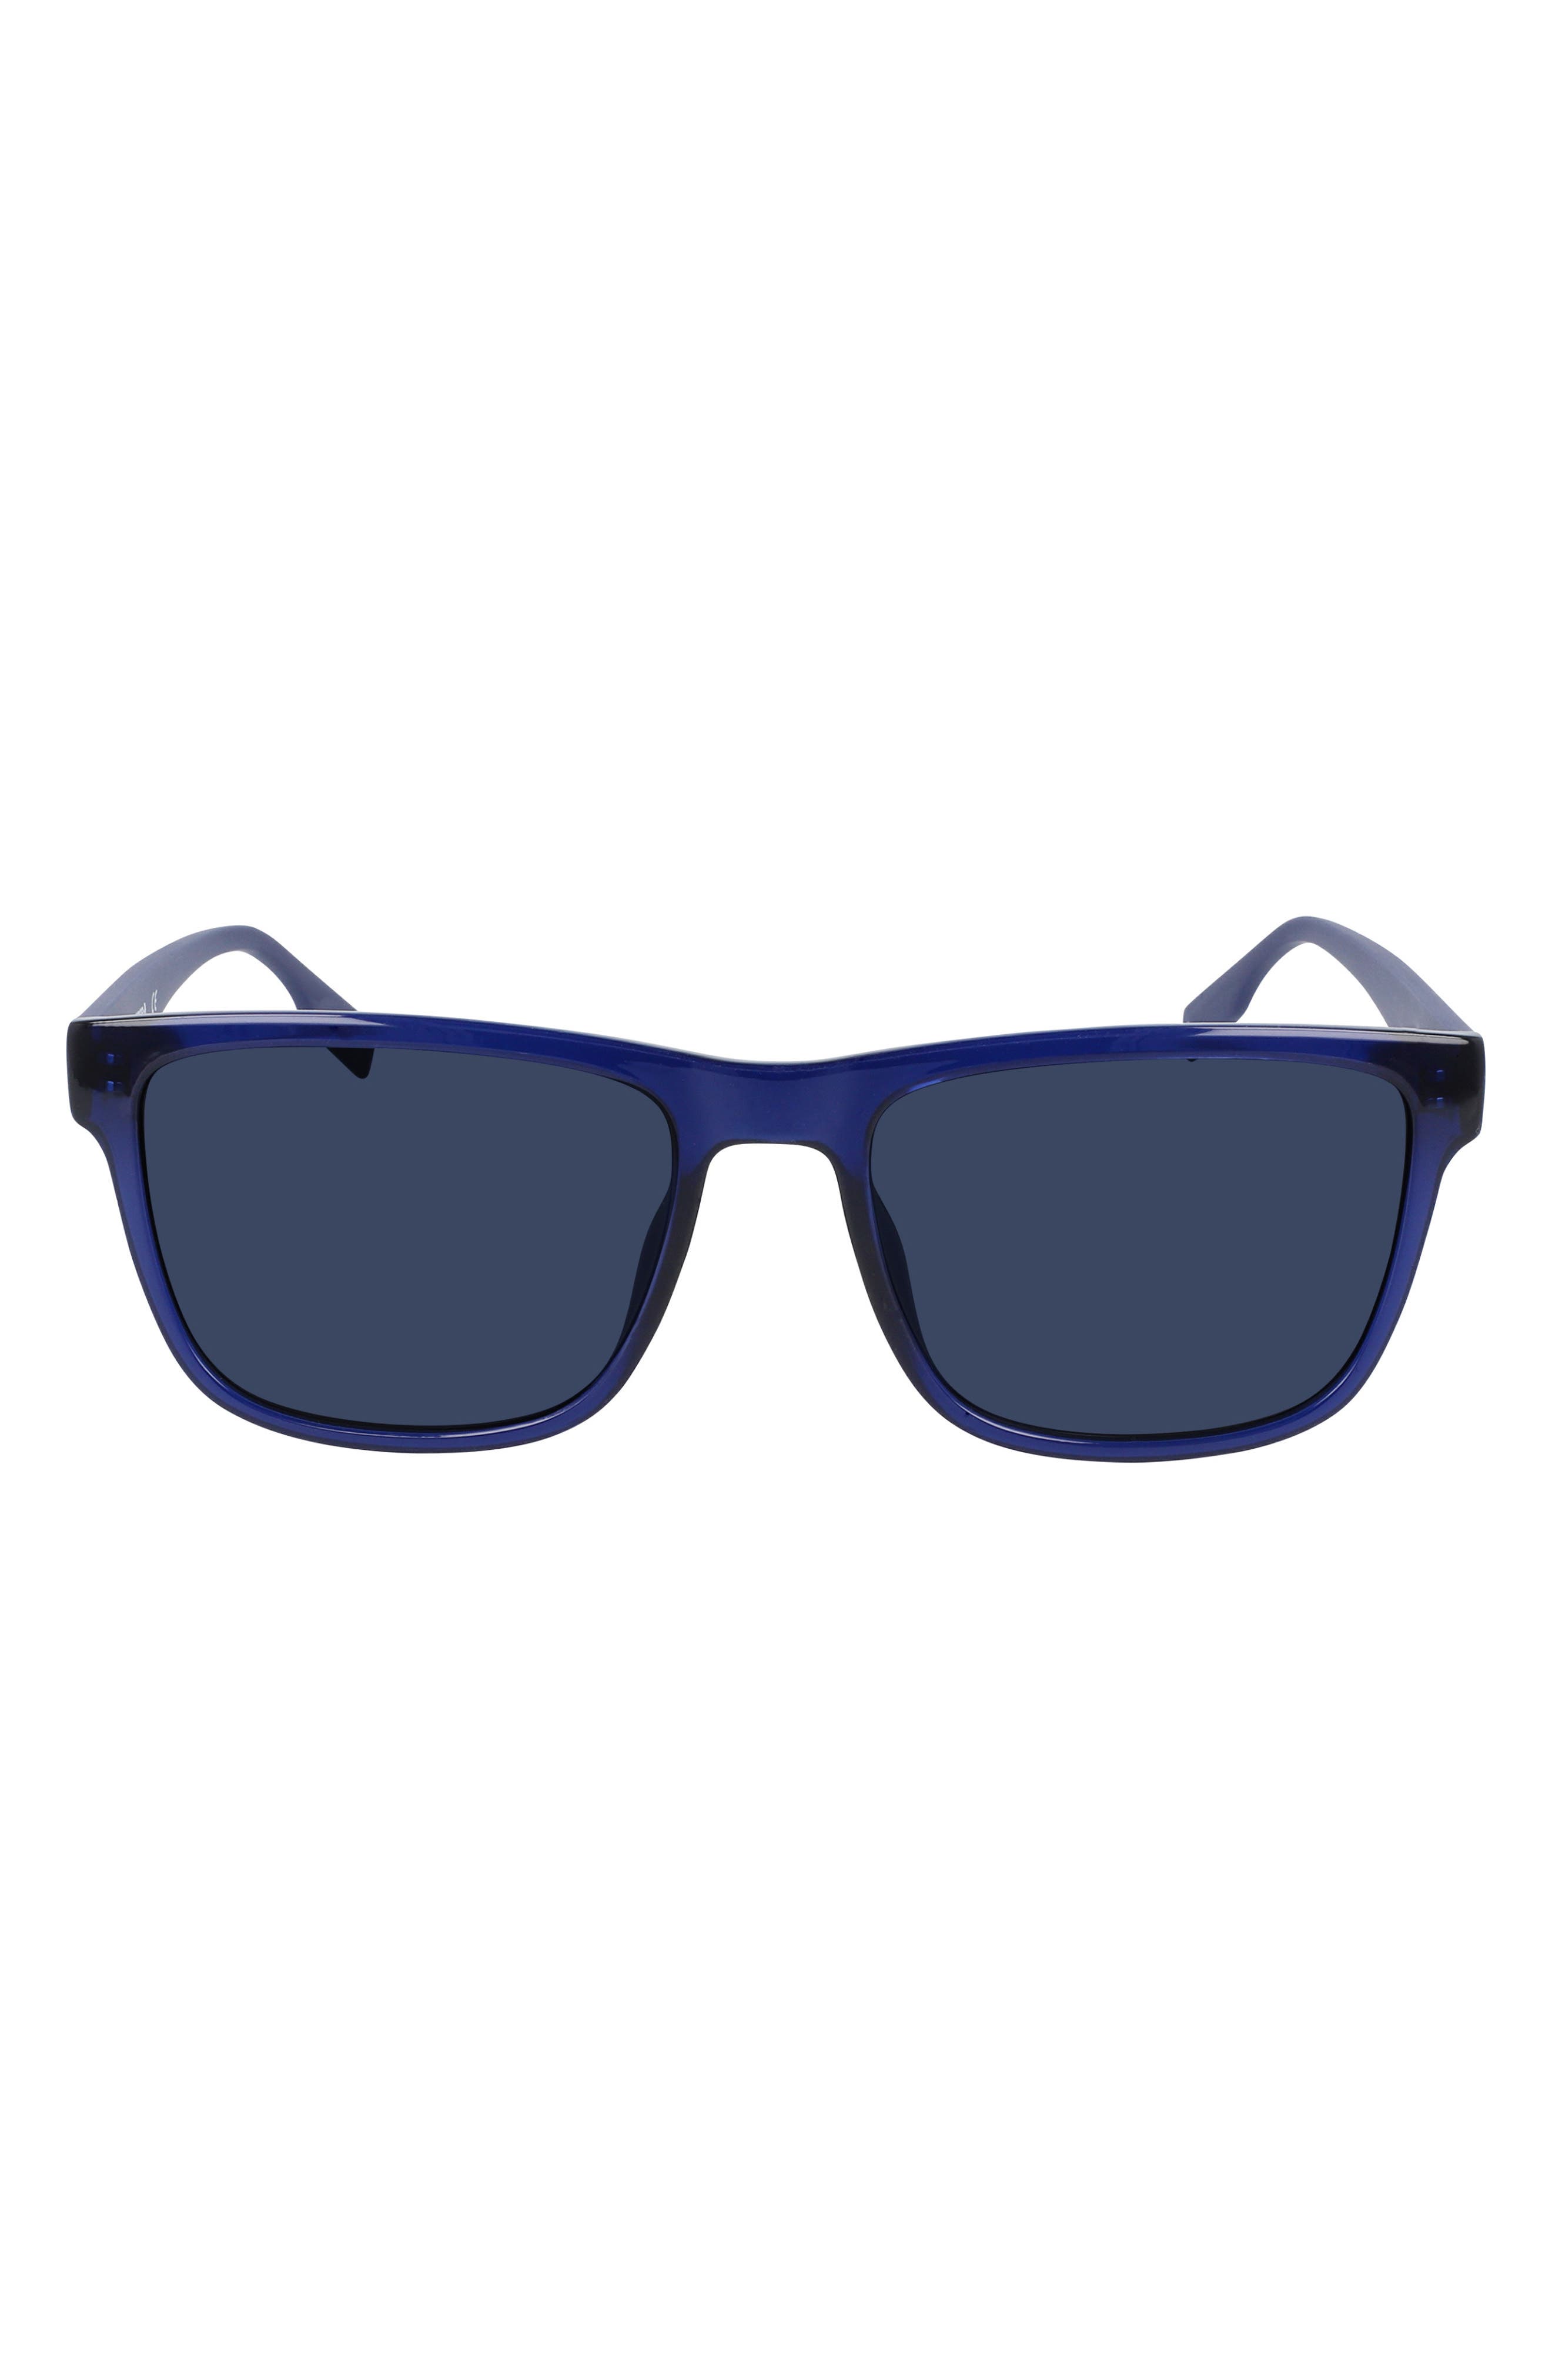 UPC 886895509367 product image for Converse Malden 58mm Rectangular Sunglasses in Crystal Midnight Navy /Blue at No | upcitemdb.com